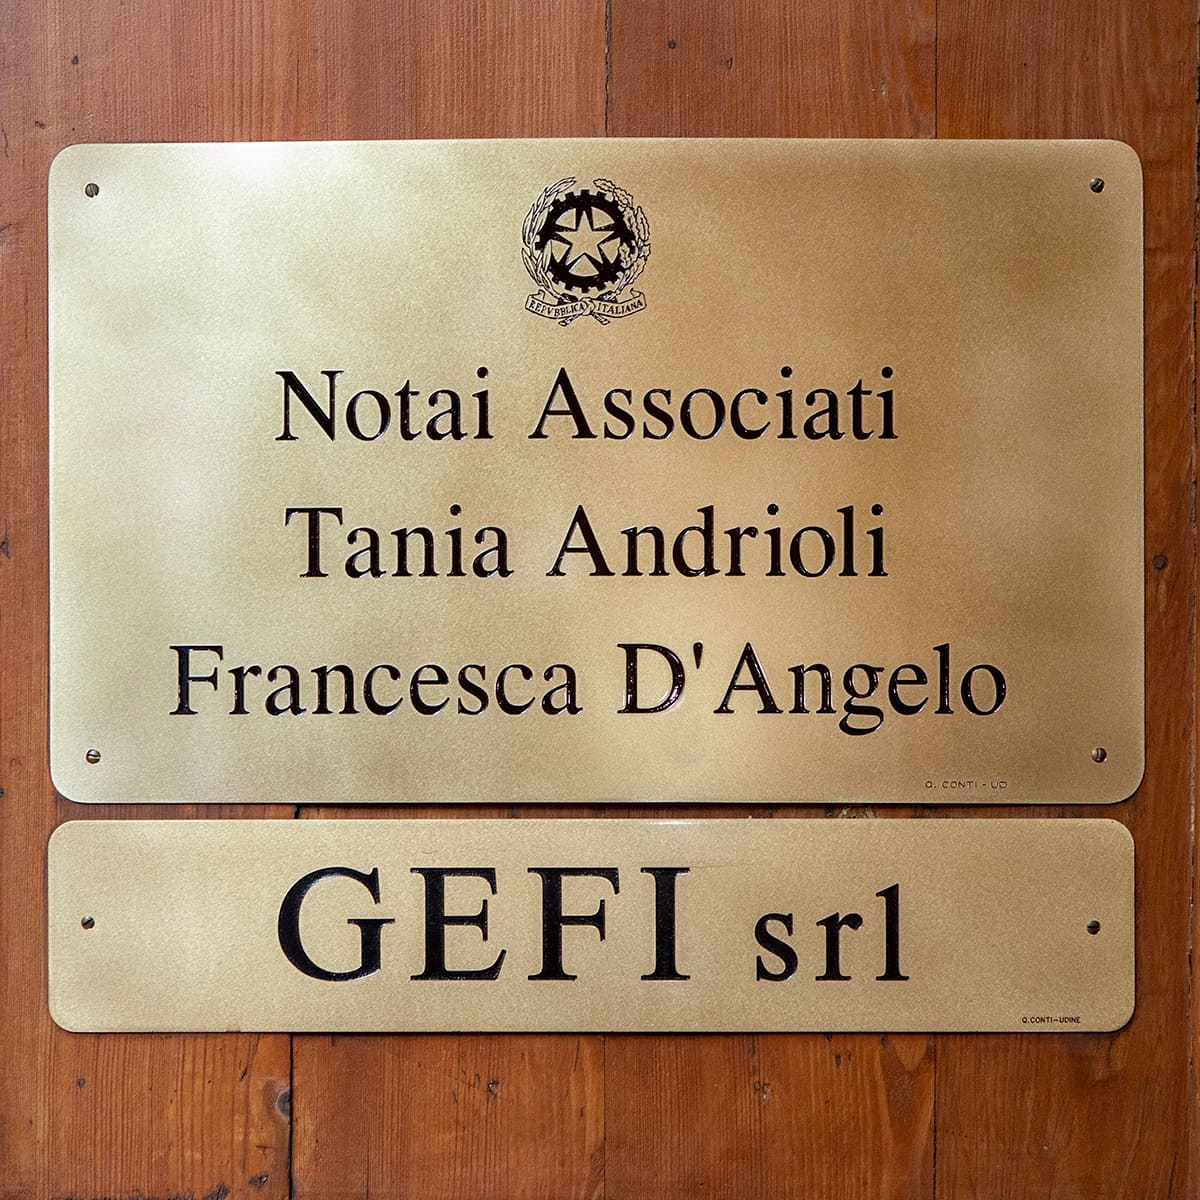 Targa-Notai-Andrioli-DAngelo-1200×1200